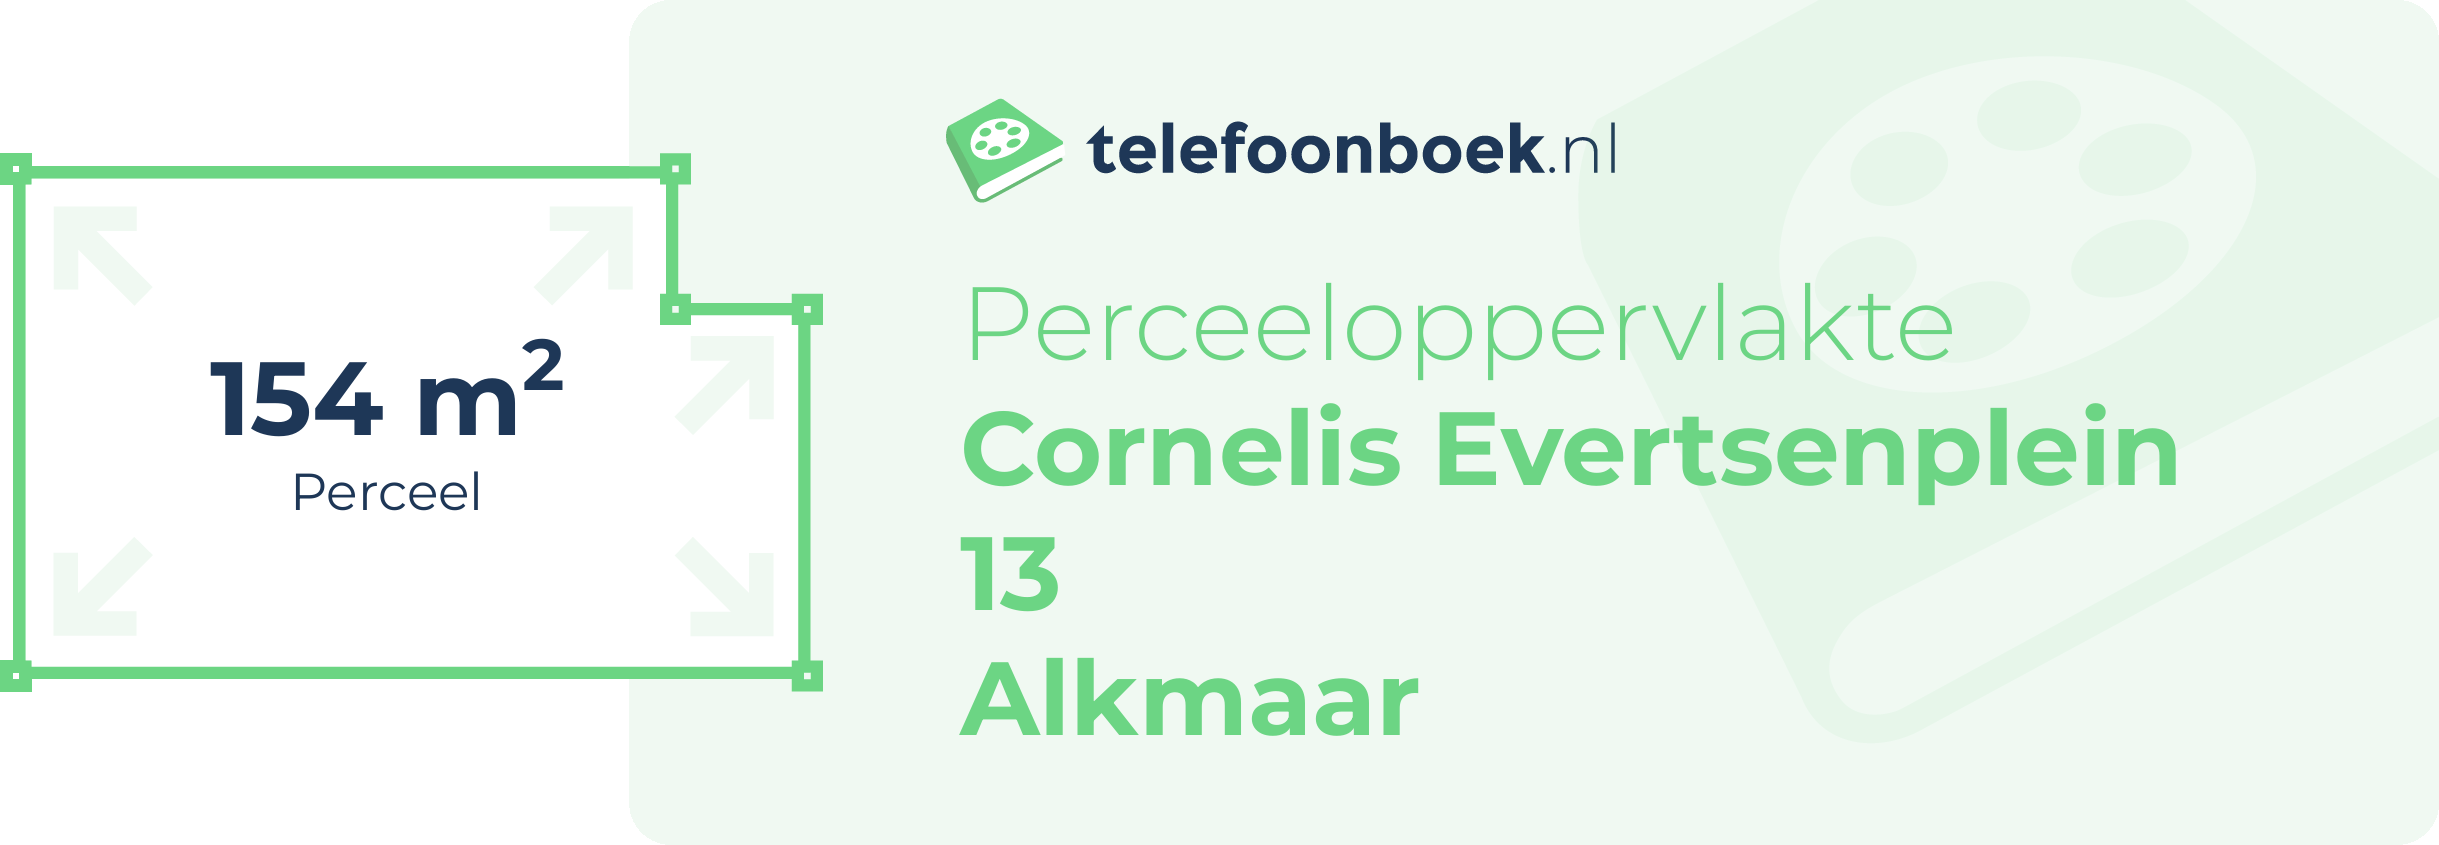 Perceeloppervlakte Cornelis Evertsenplein 13 Alkmaar